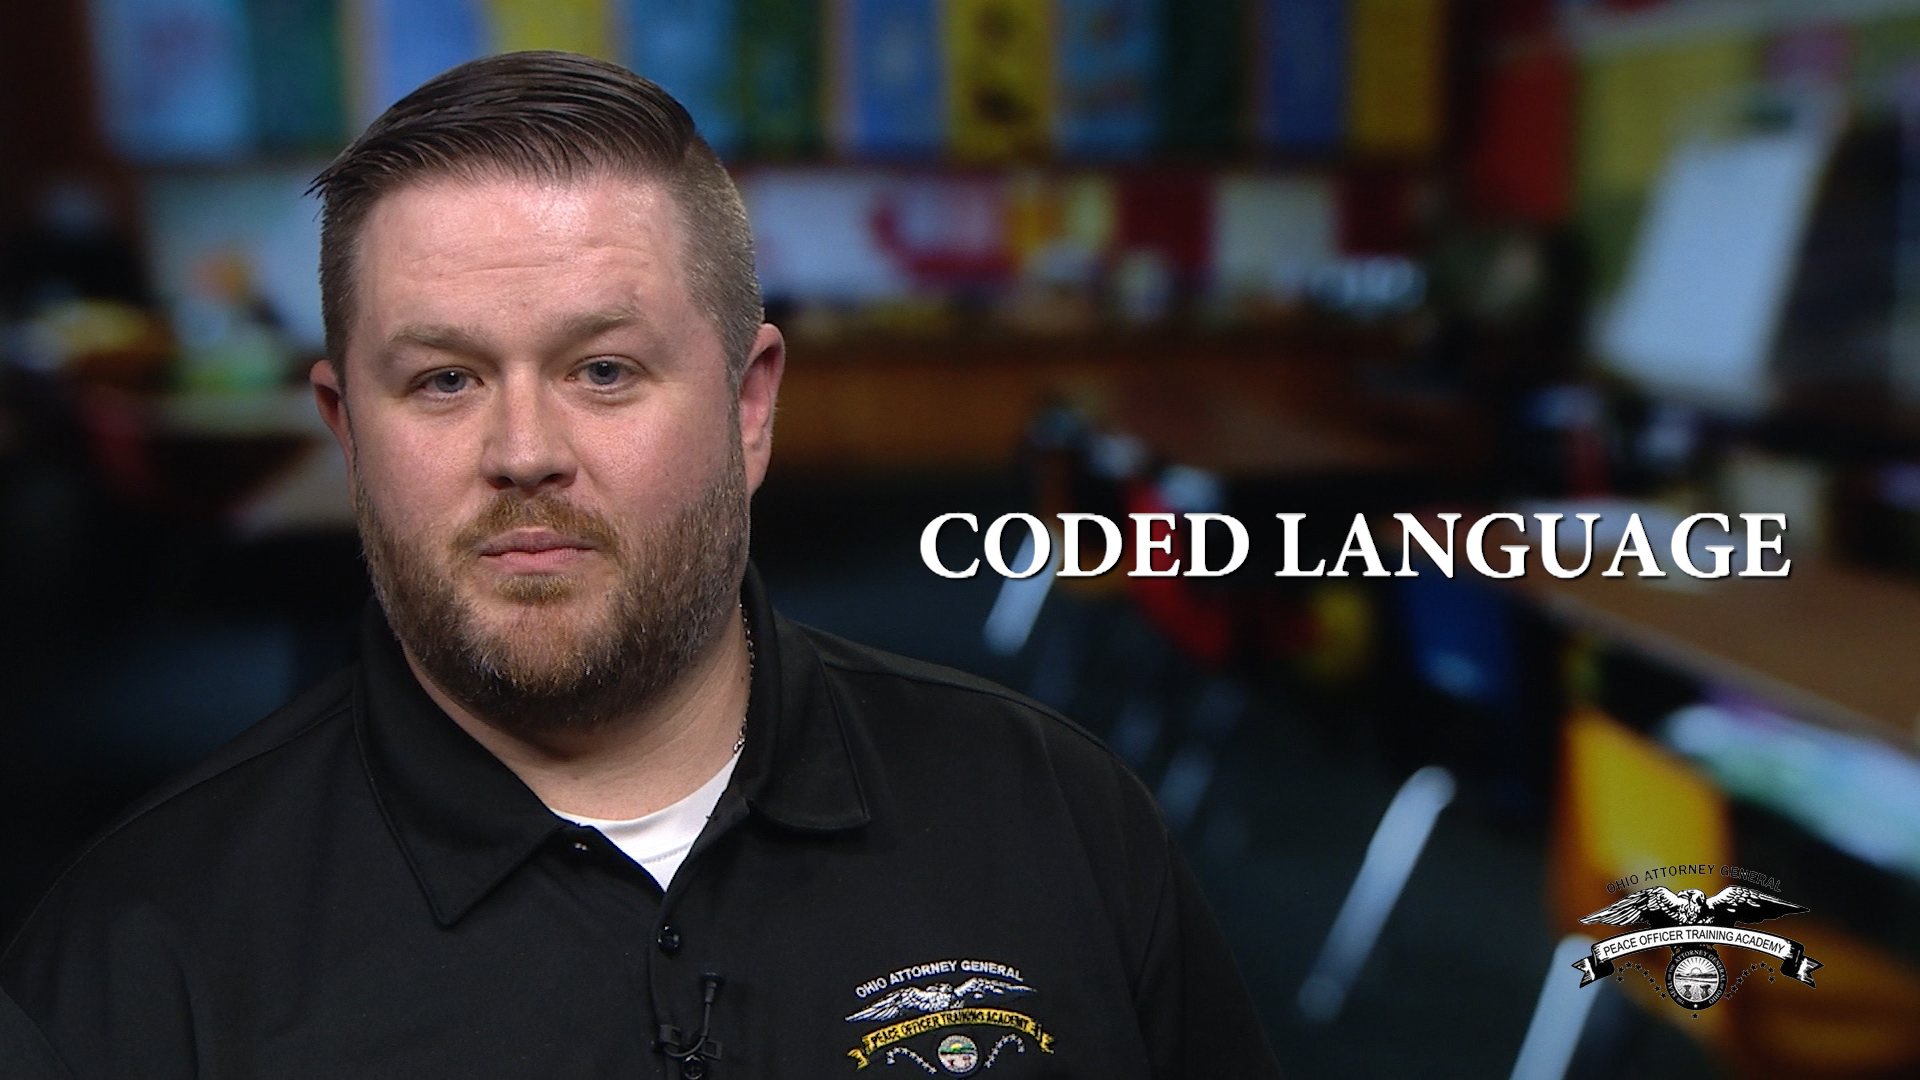 Video 2: Coded Language